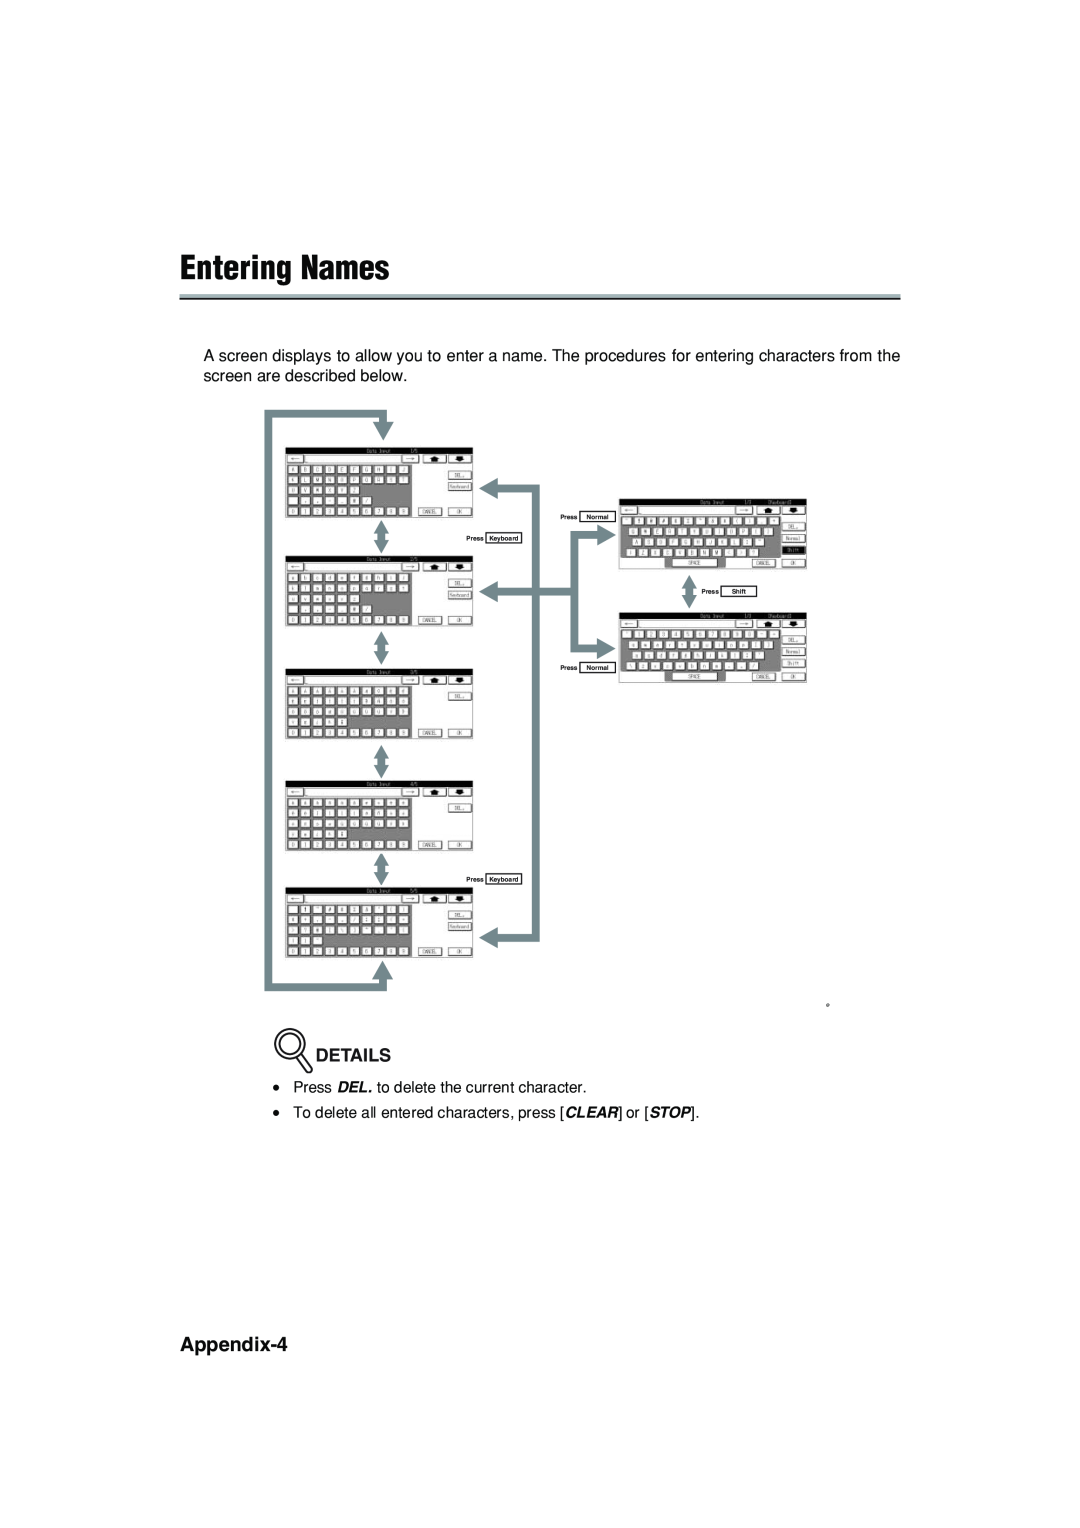 Konica Minolta 7222 manual Entering Names, Appendix-4, Details, Press Keyboard Press Keyboard 